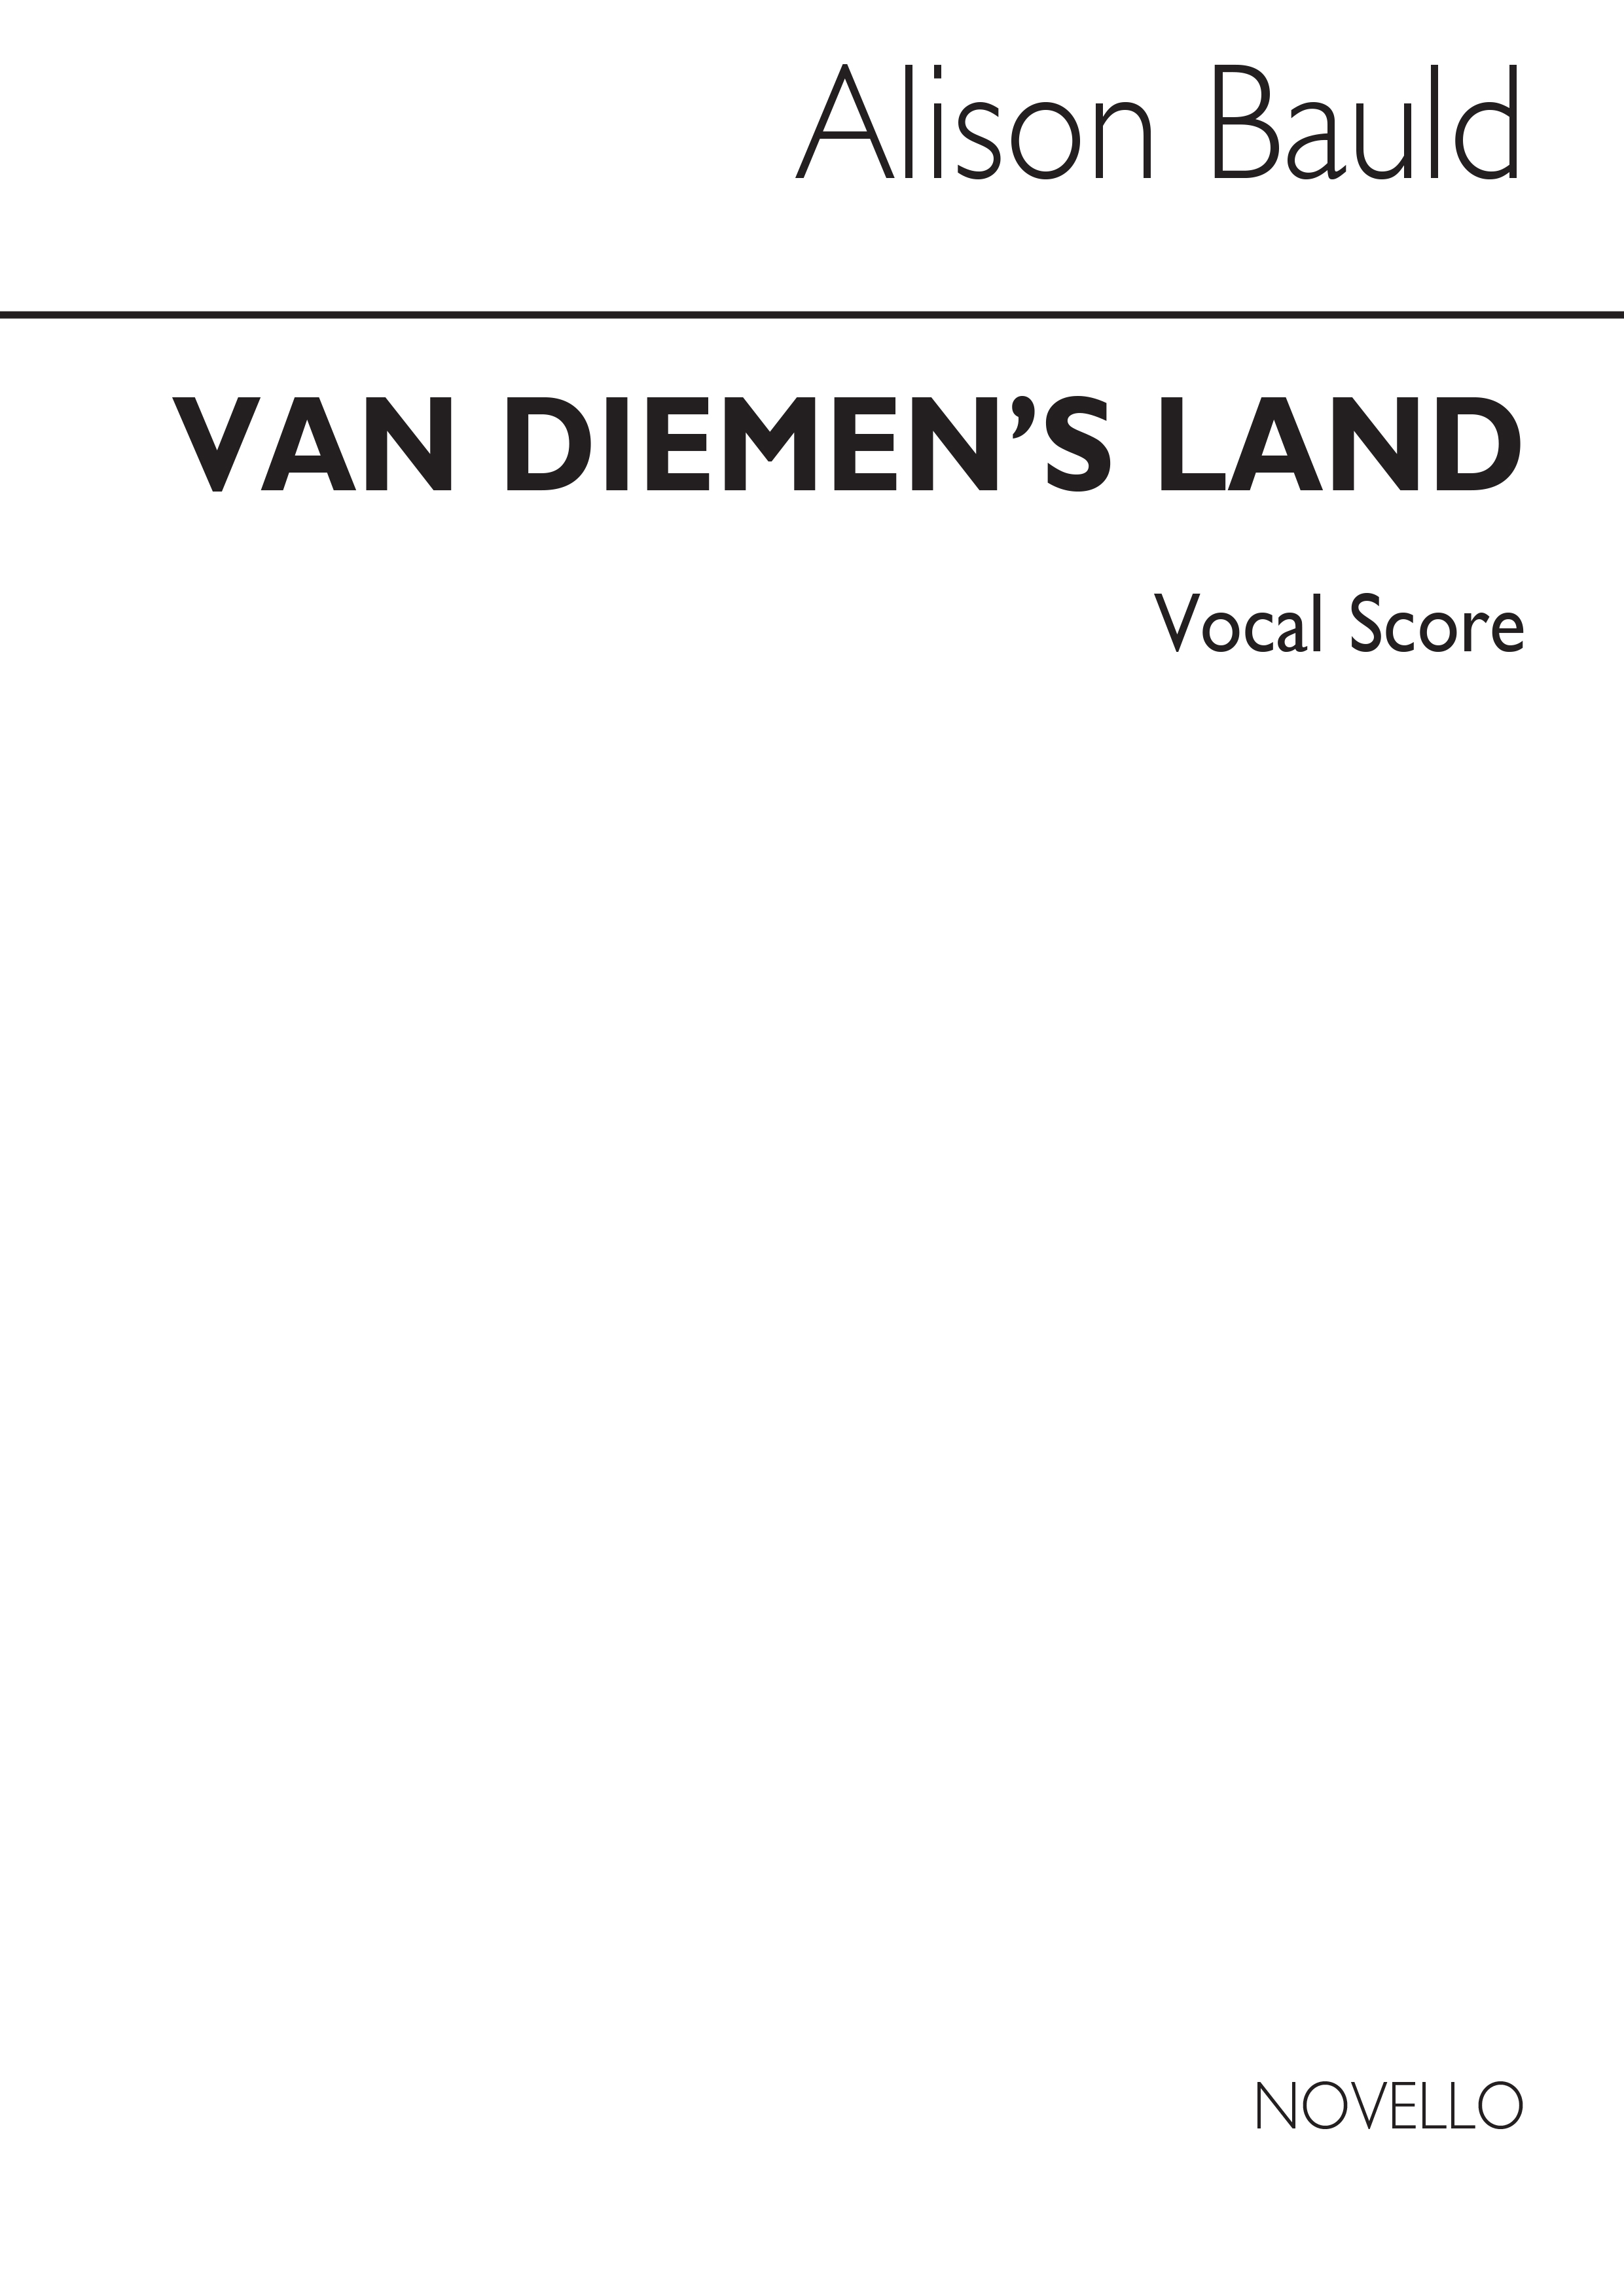 Bauld: Van Diemen's Land for SATB Chorus